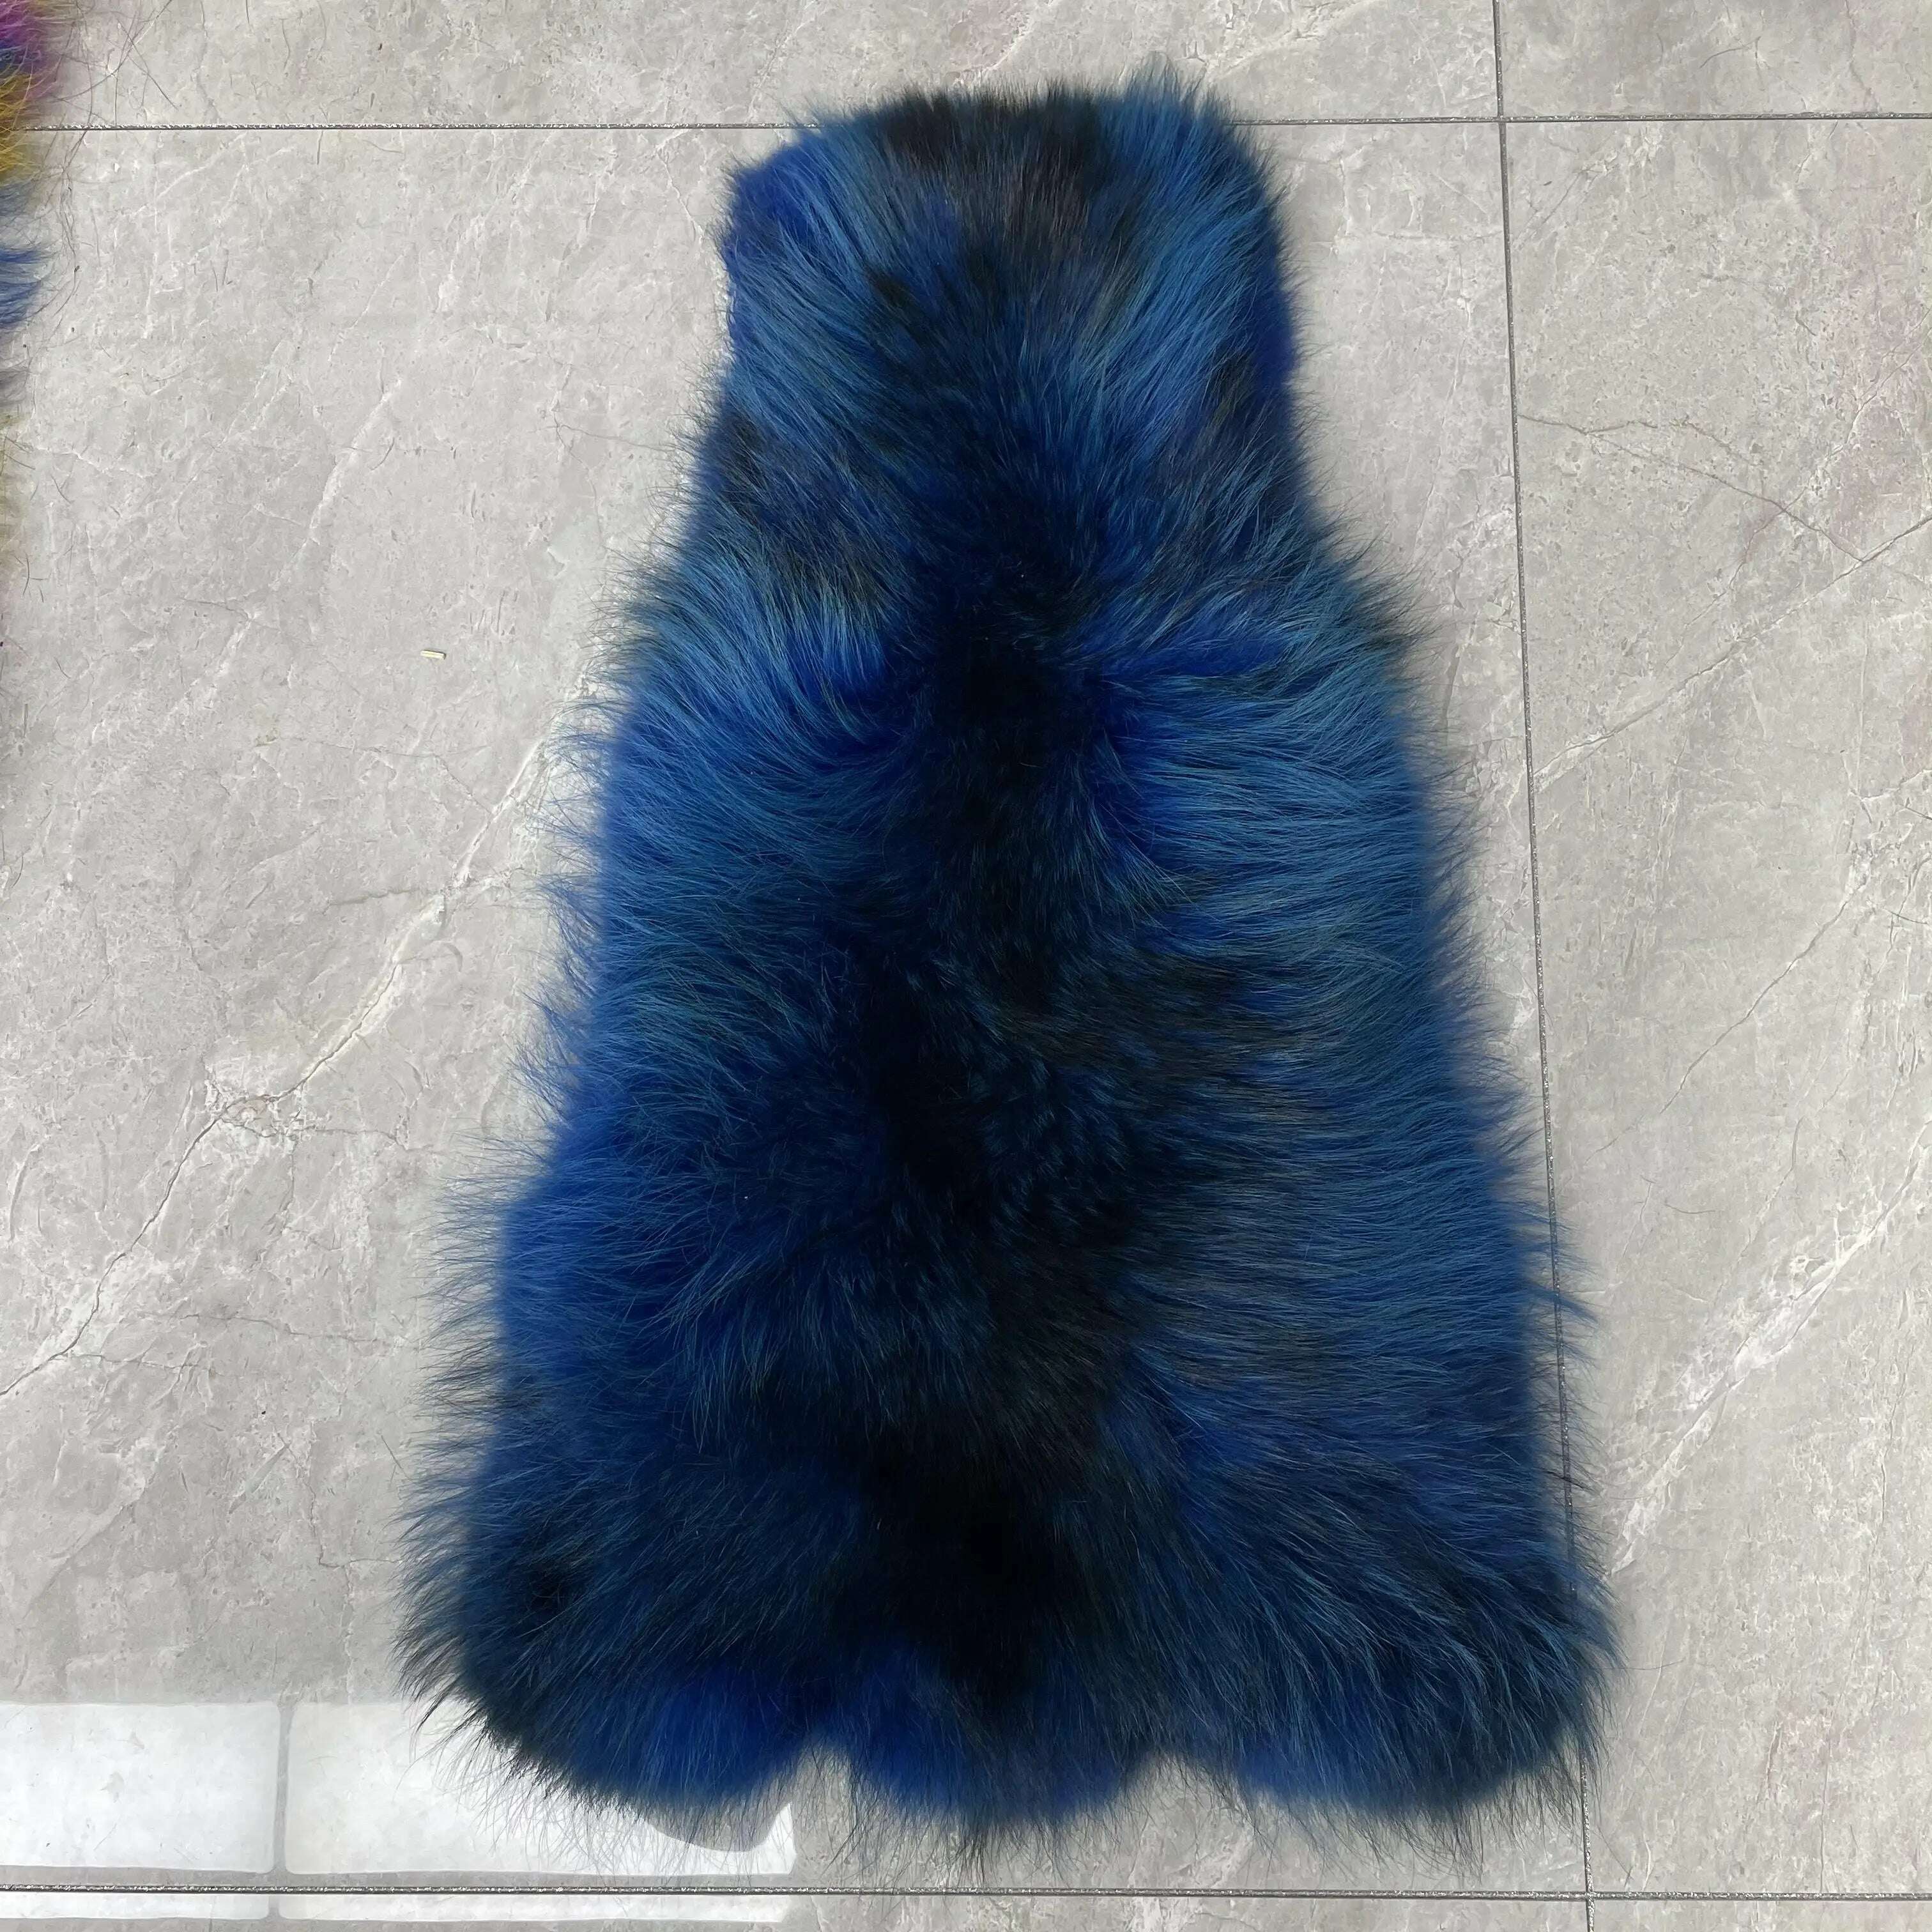 KIMLUD, Wholeskin Men Golden Fox Fur Long Coats Shawl Collar Winter Overcoats Genuine Natural Fox Furs Jacket, Deep Blue / XS(88cm), KIMLUD Women's Clothes